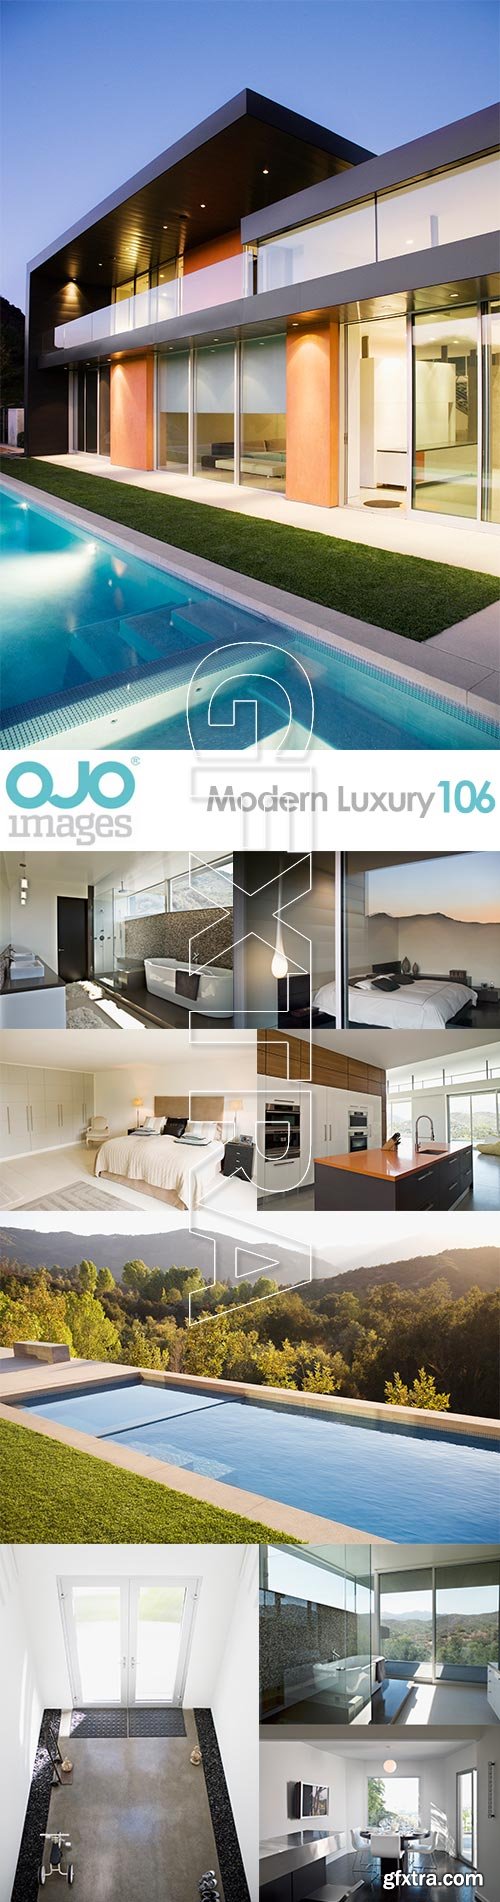 OJO Images 106 Modern Luxury